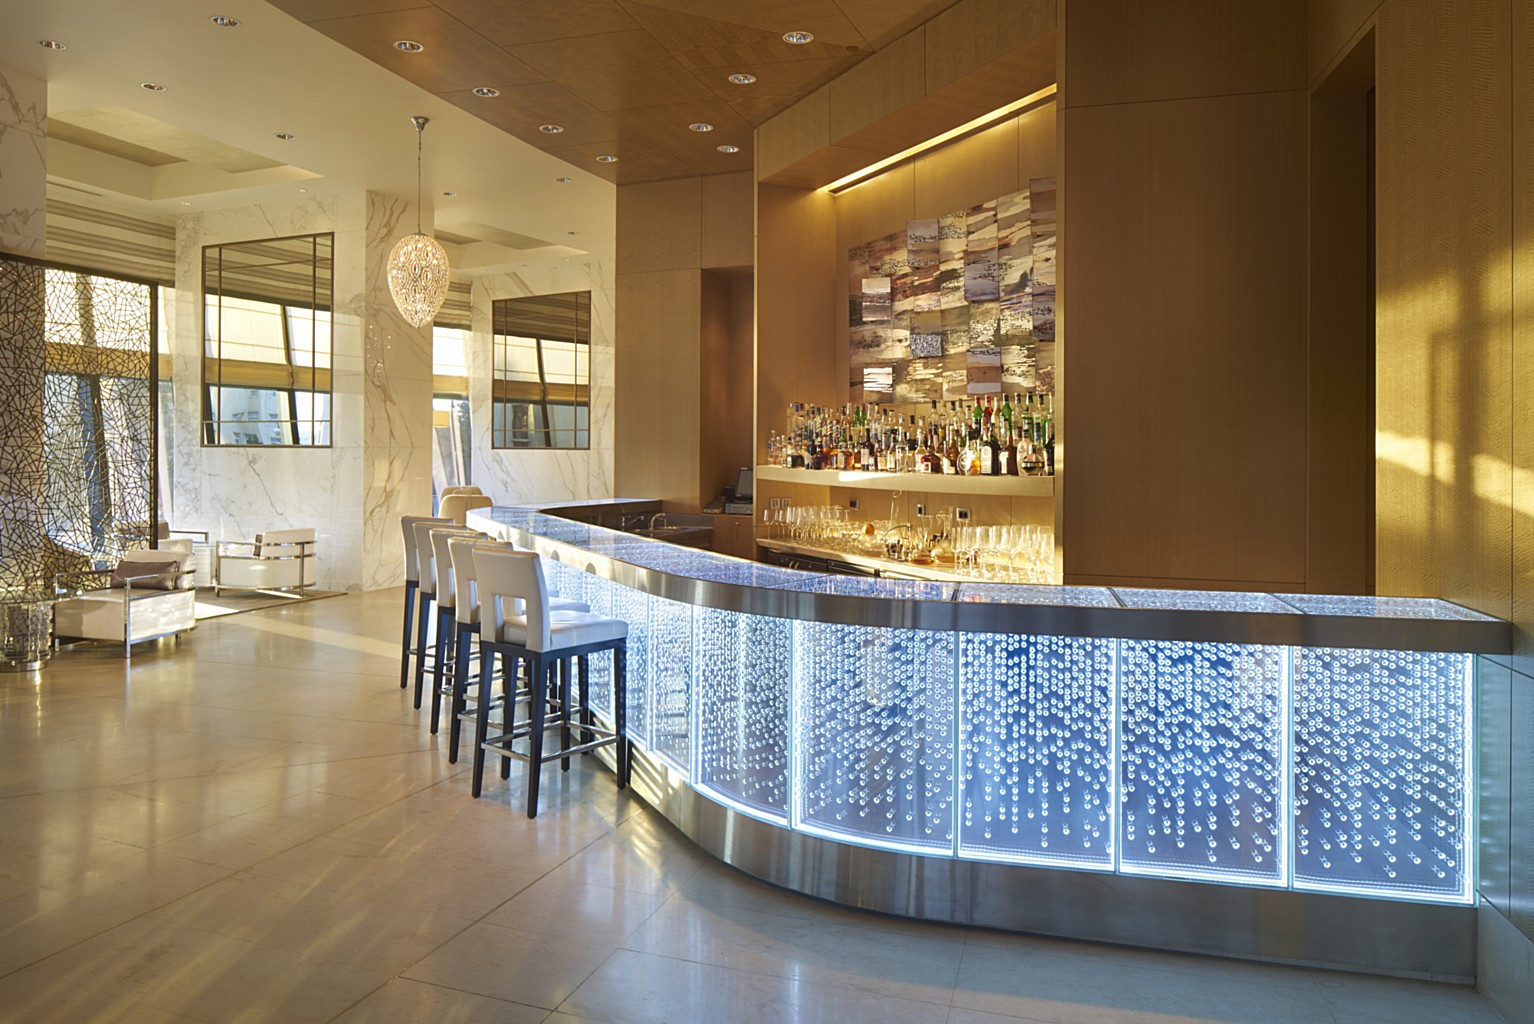 Hotel Lobby luxury decorative large glass chandelier (KJ007)